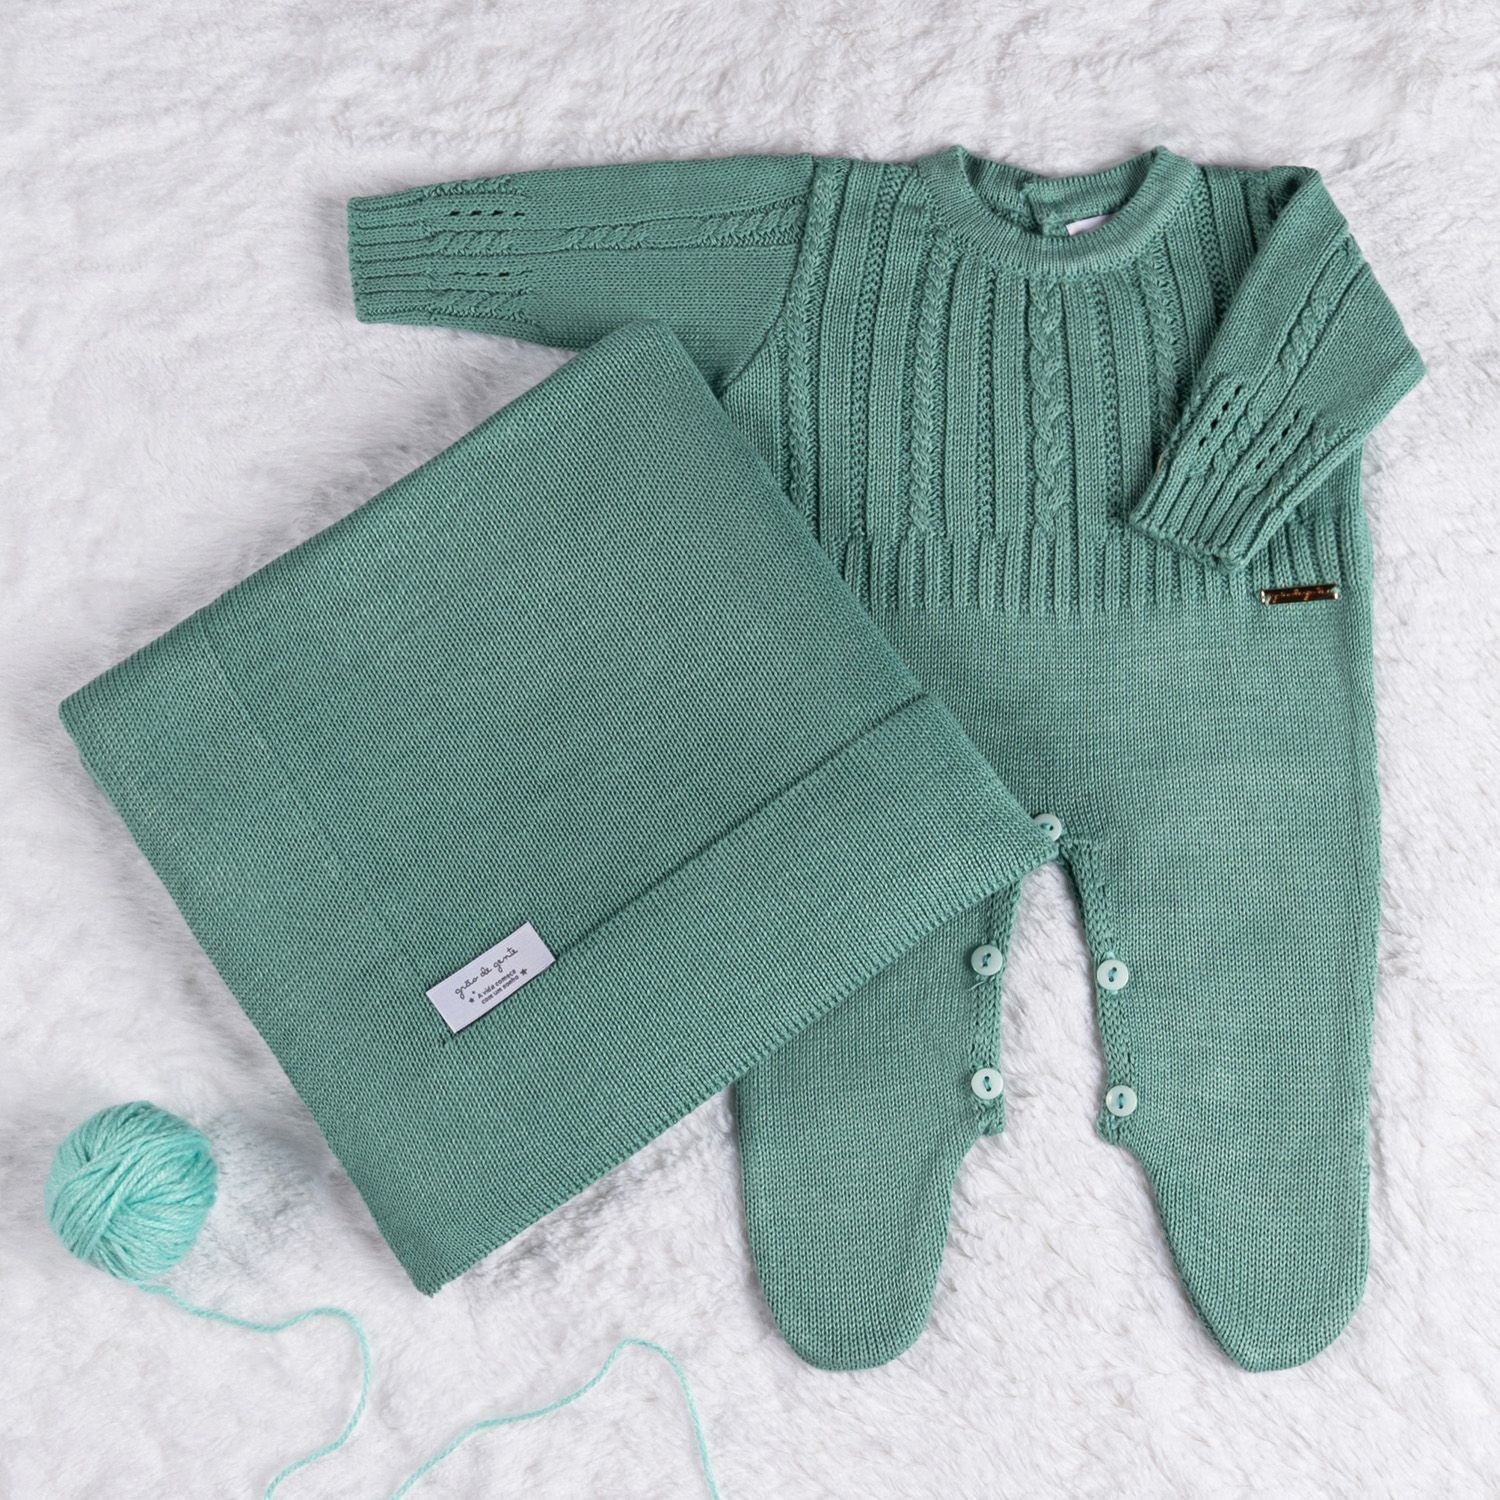 2 Piece Pistachio Green Knitted Newborn Coming Home Set